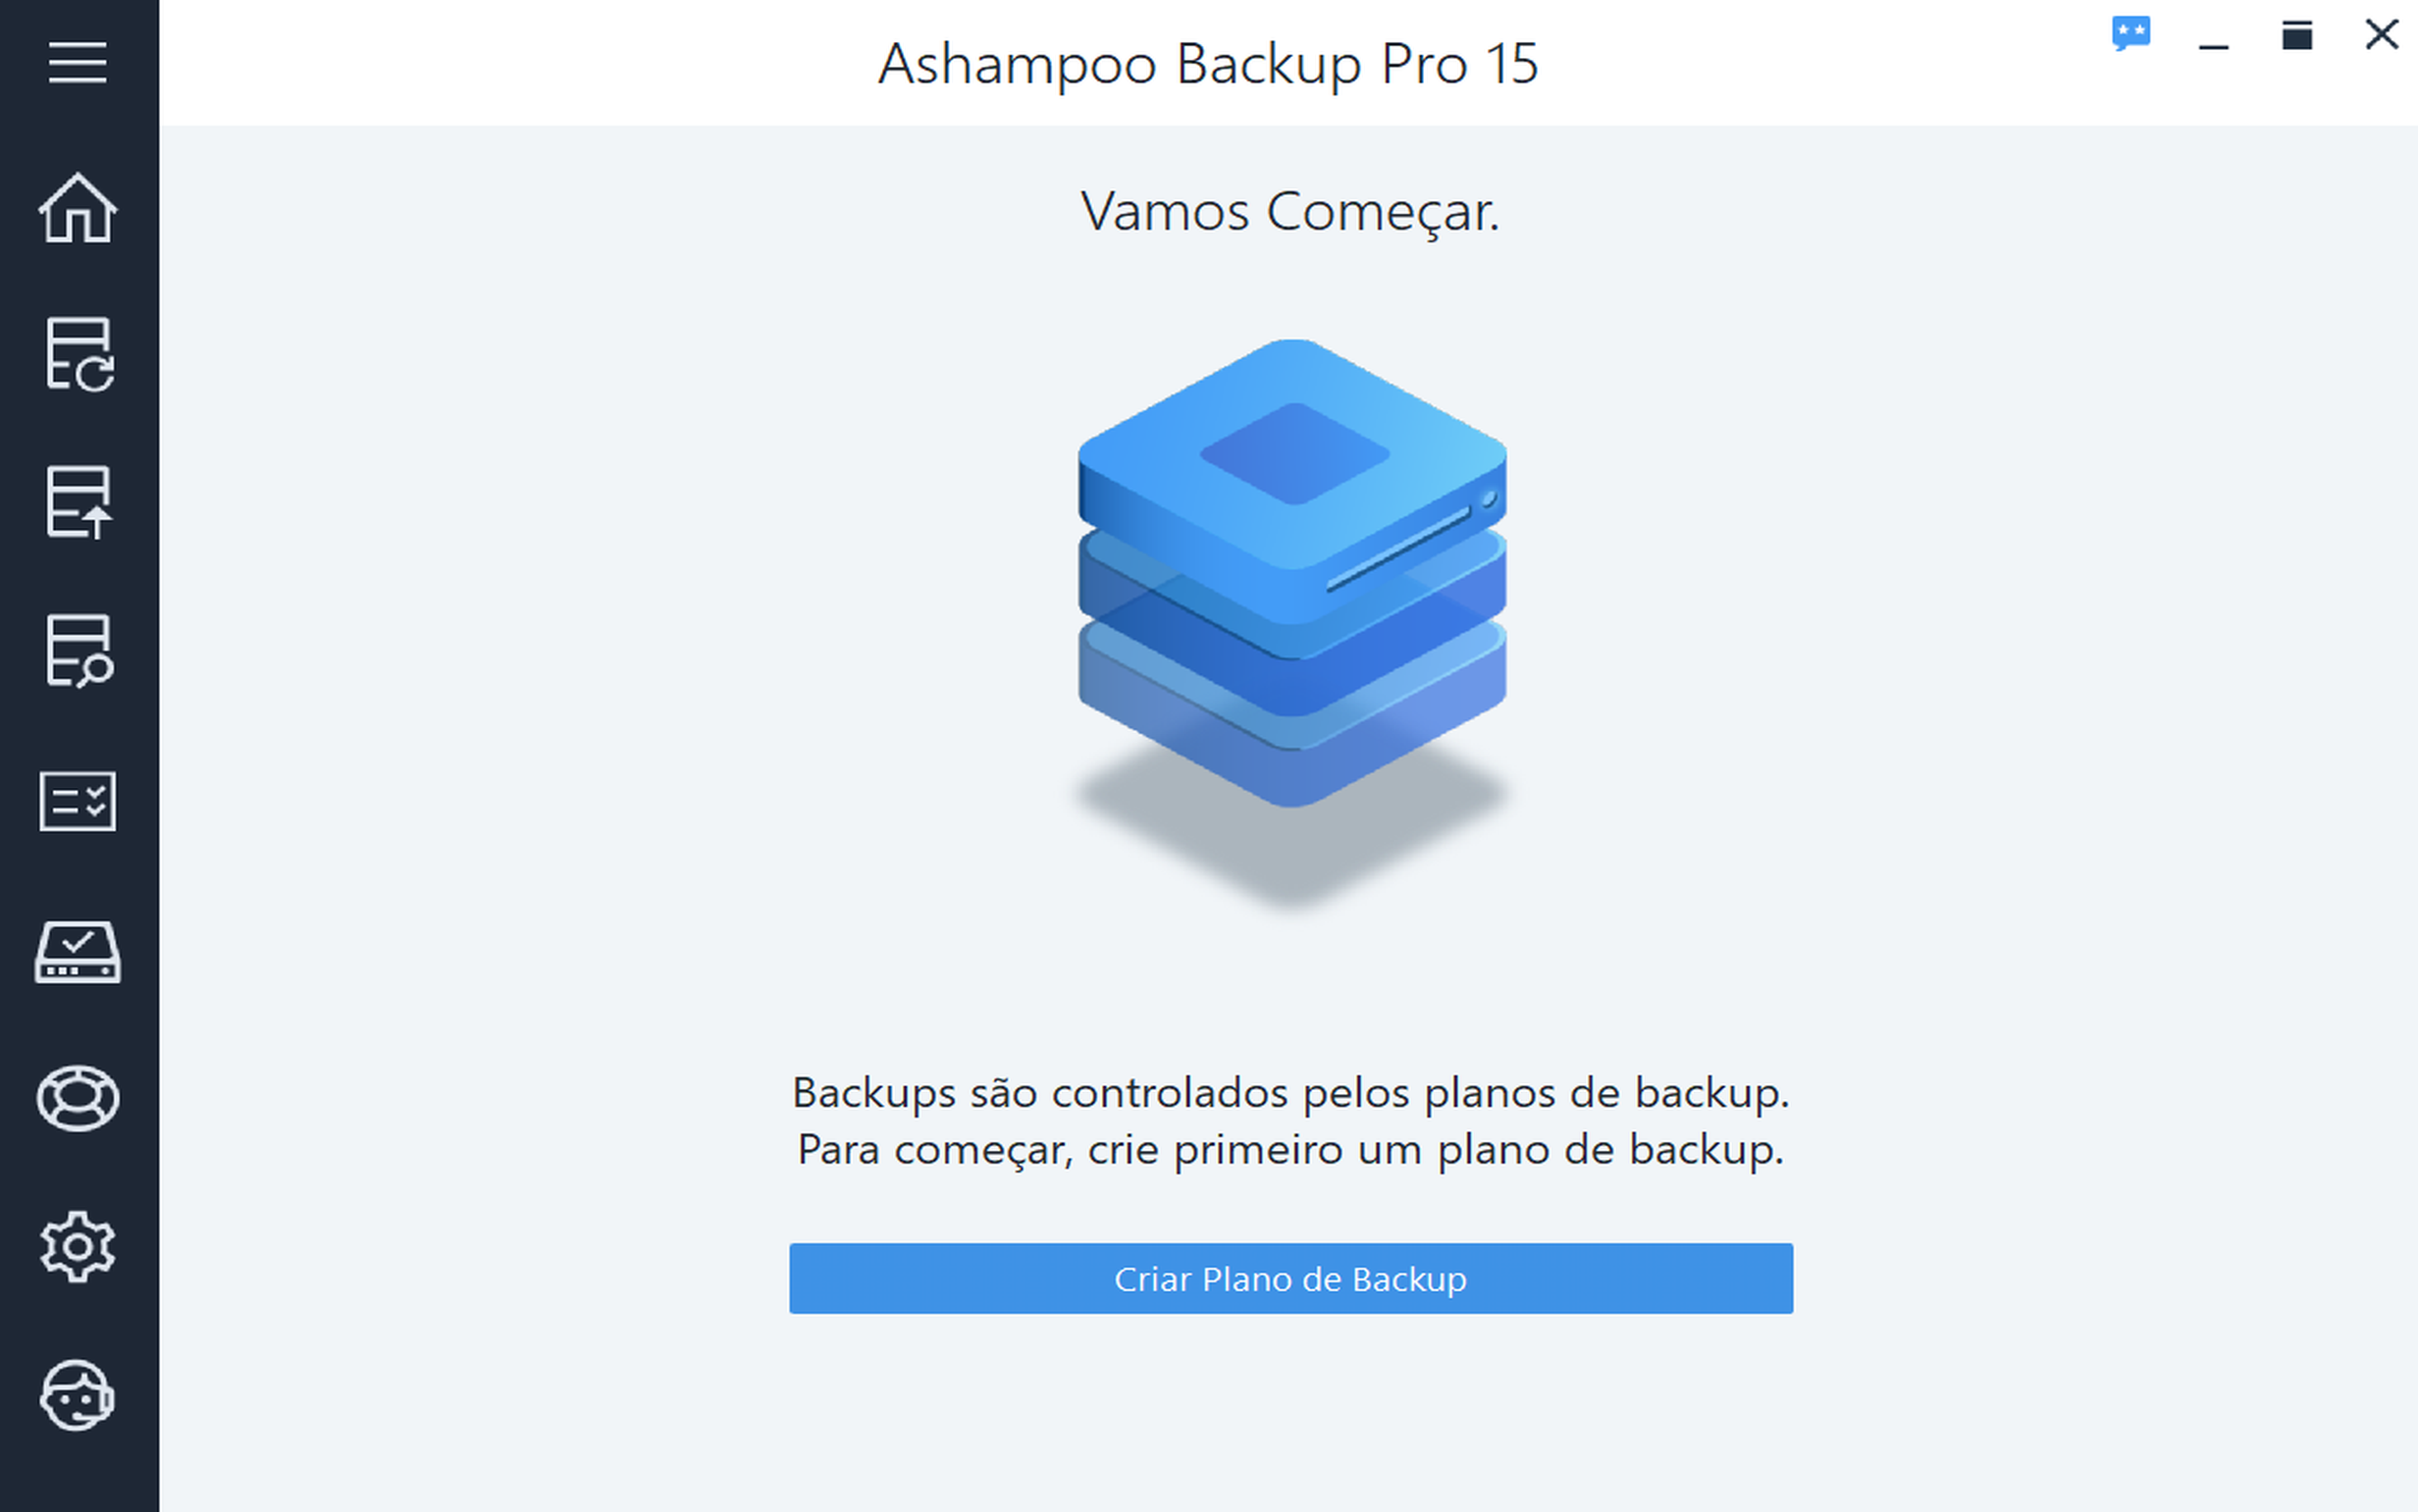 Backup Pro 15 - main